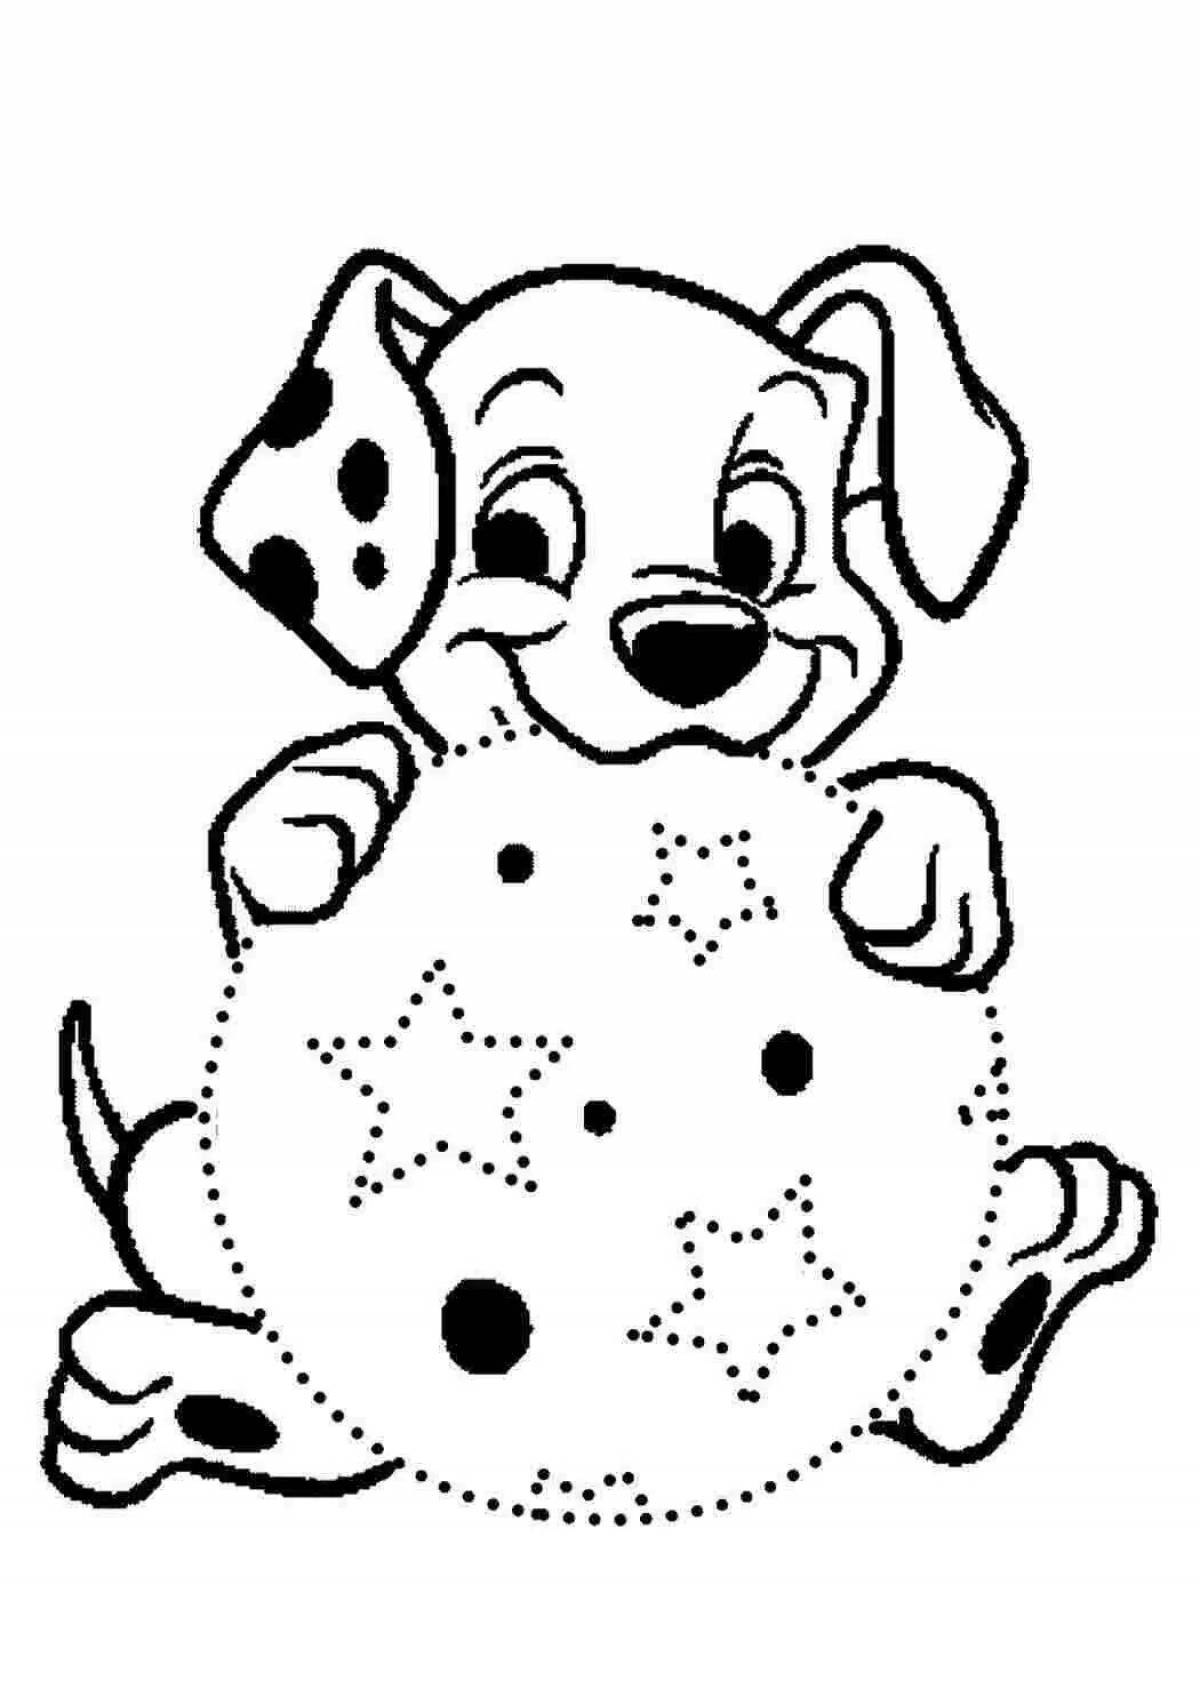 A fun Dalmatian coloring book for kids